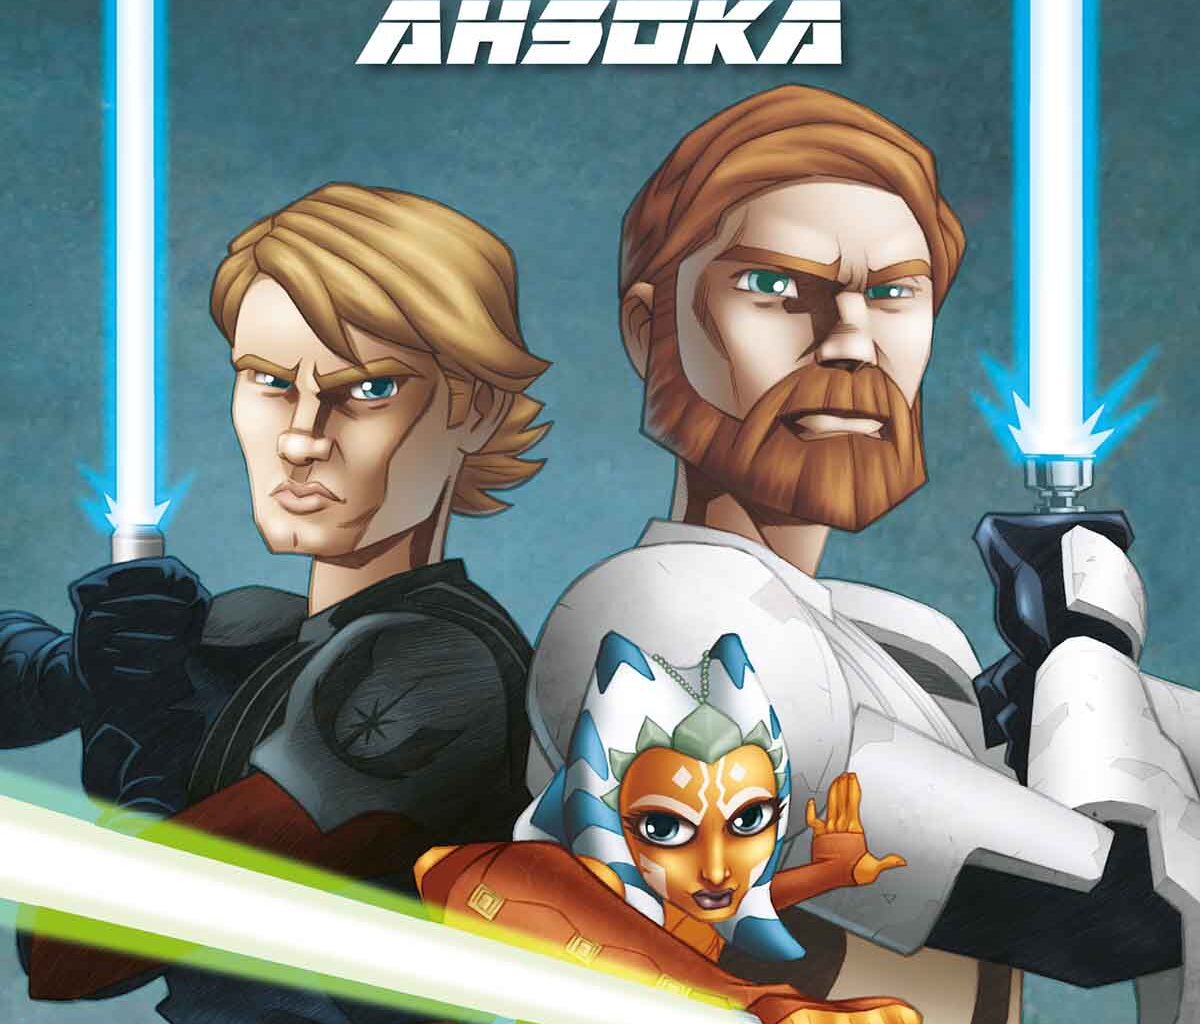 Cover des Comics Star Wars: Ahsoka 1 von Panini Comics.